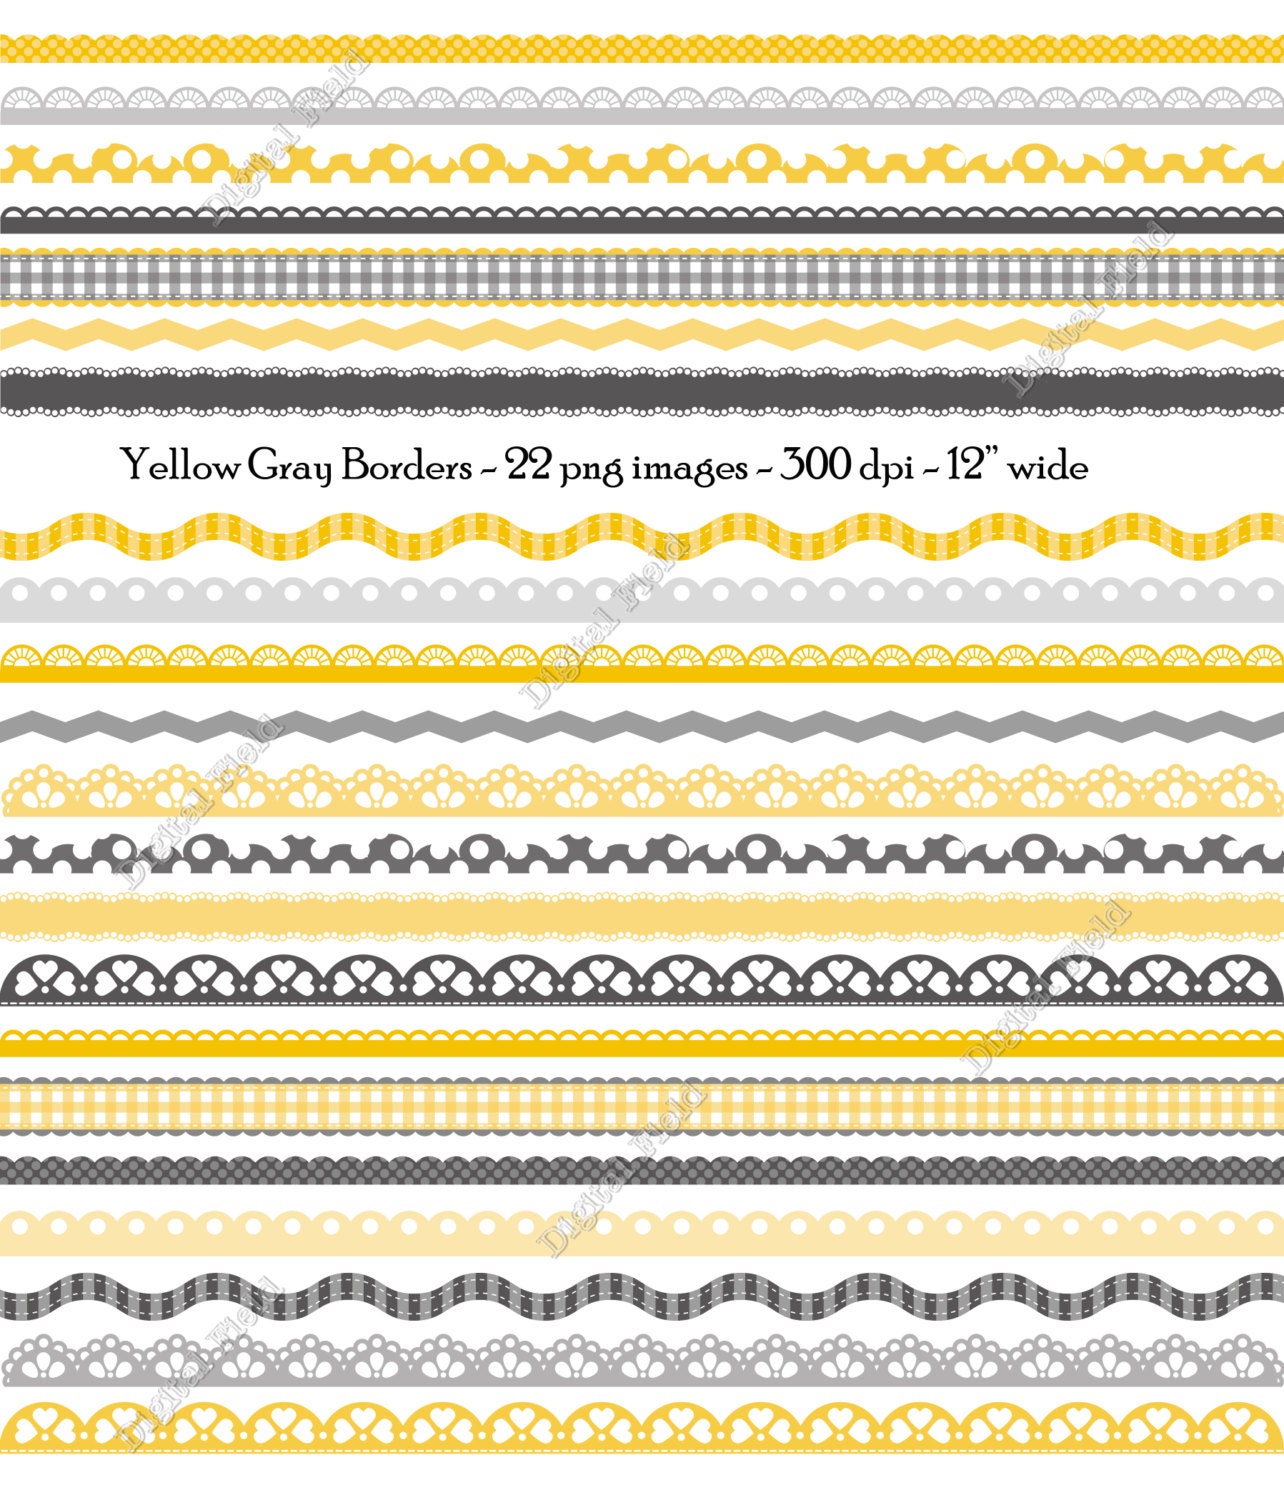 Yellow Gray Digital Borders and Ribbons Clip Art by digitalfield